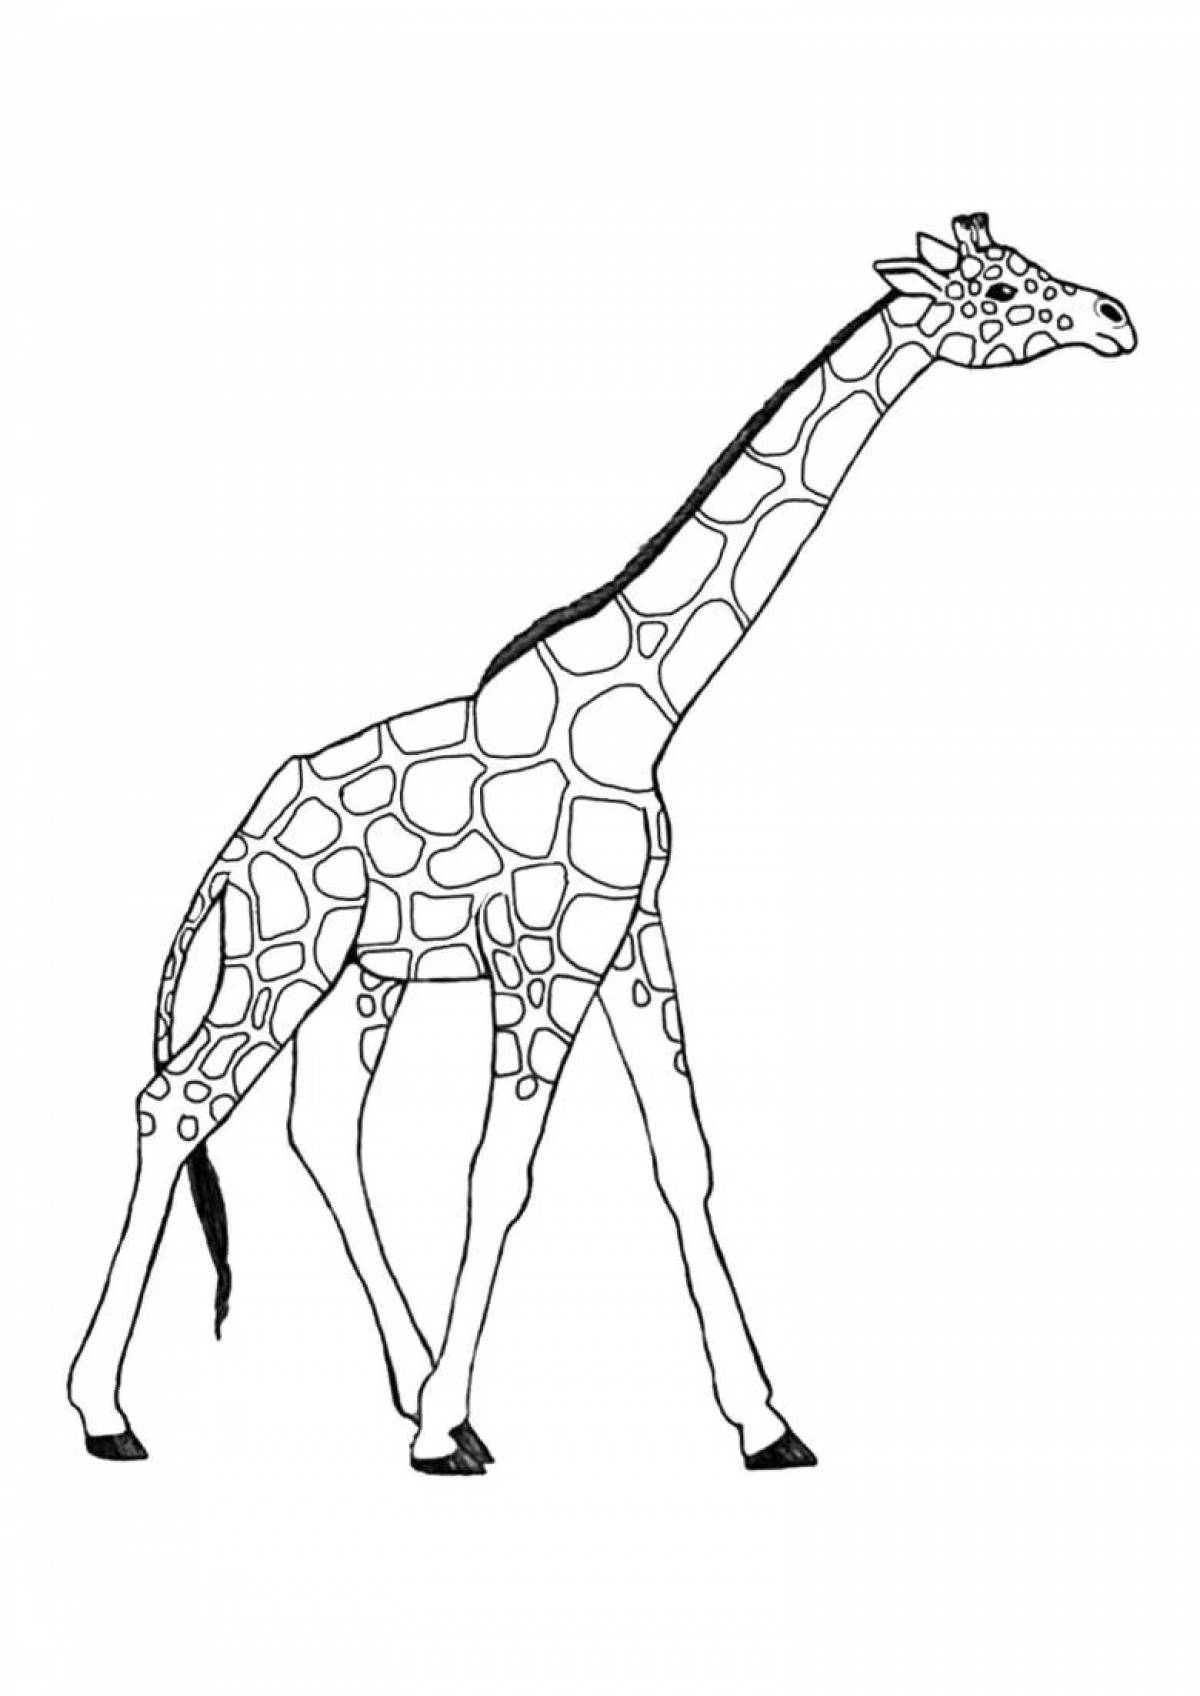 Shiny giraffe pattern for kids